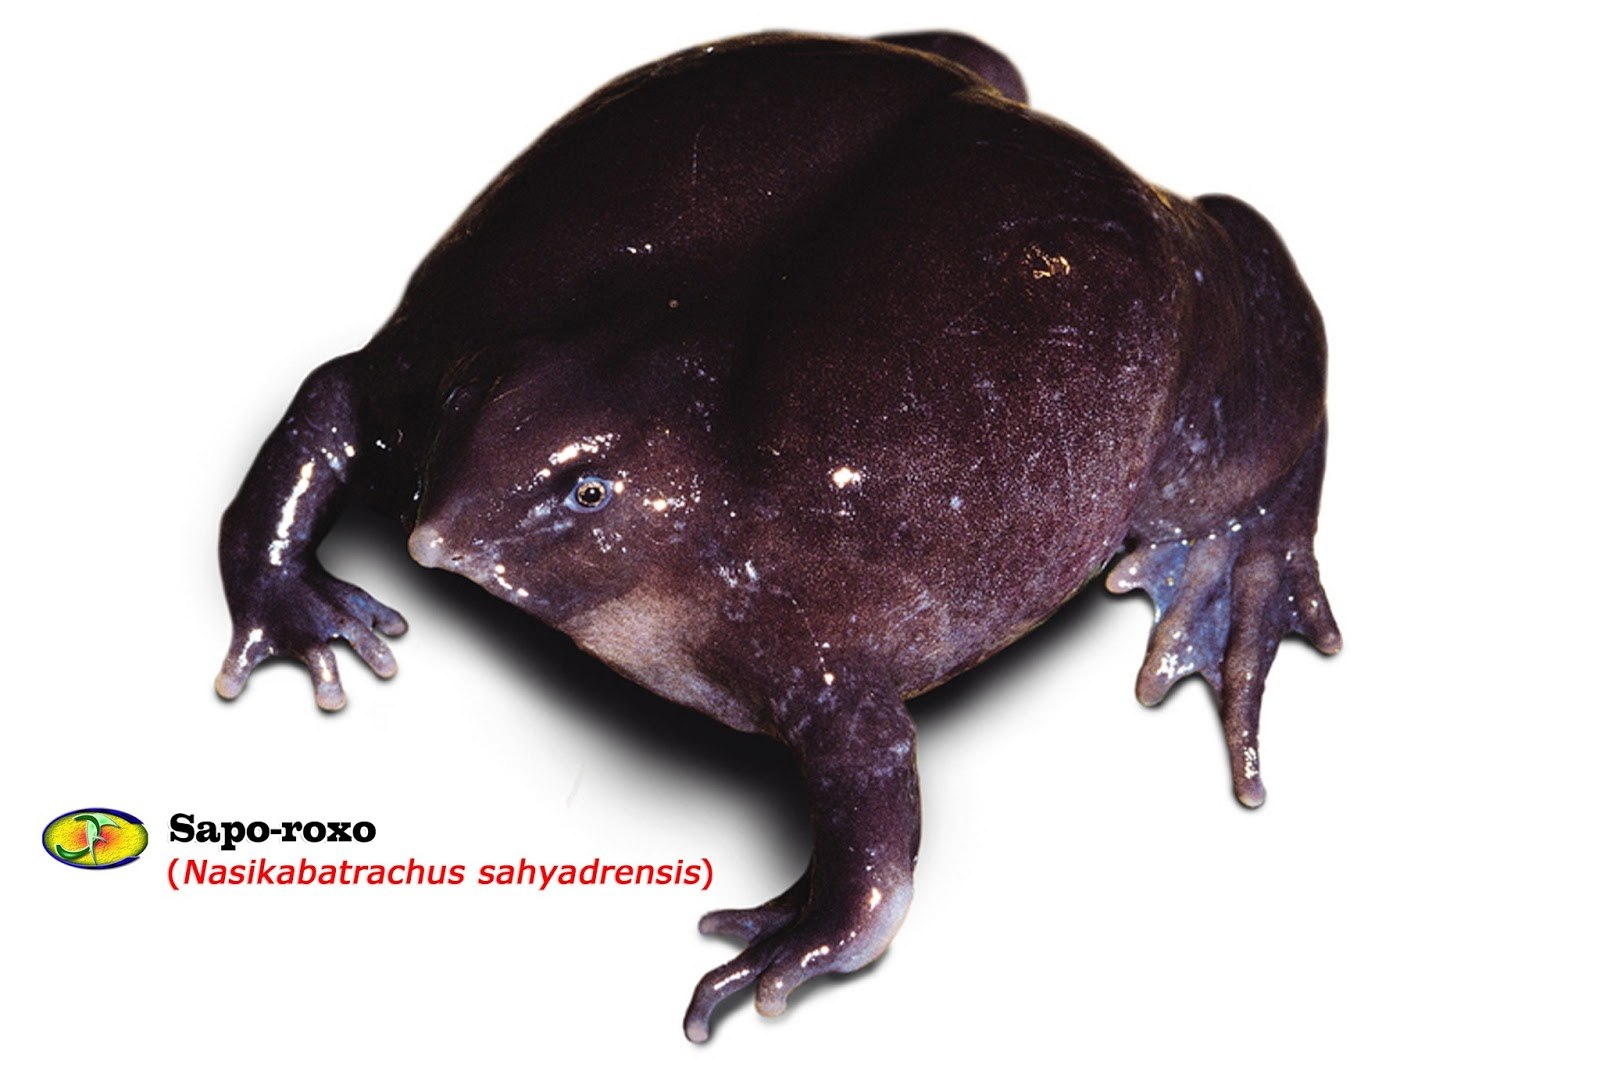 Фиолетовая лягушка. Индийская лиловая пурпурная лягушка. Насикабатрачус сахядренсис лягушка. Пурпурная свиноносая лягушка.